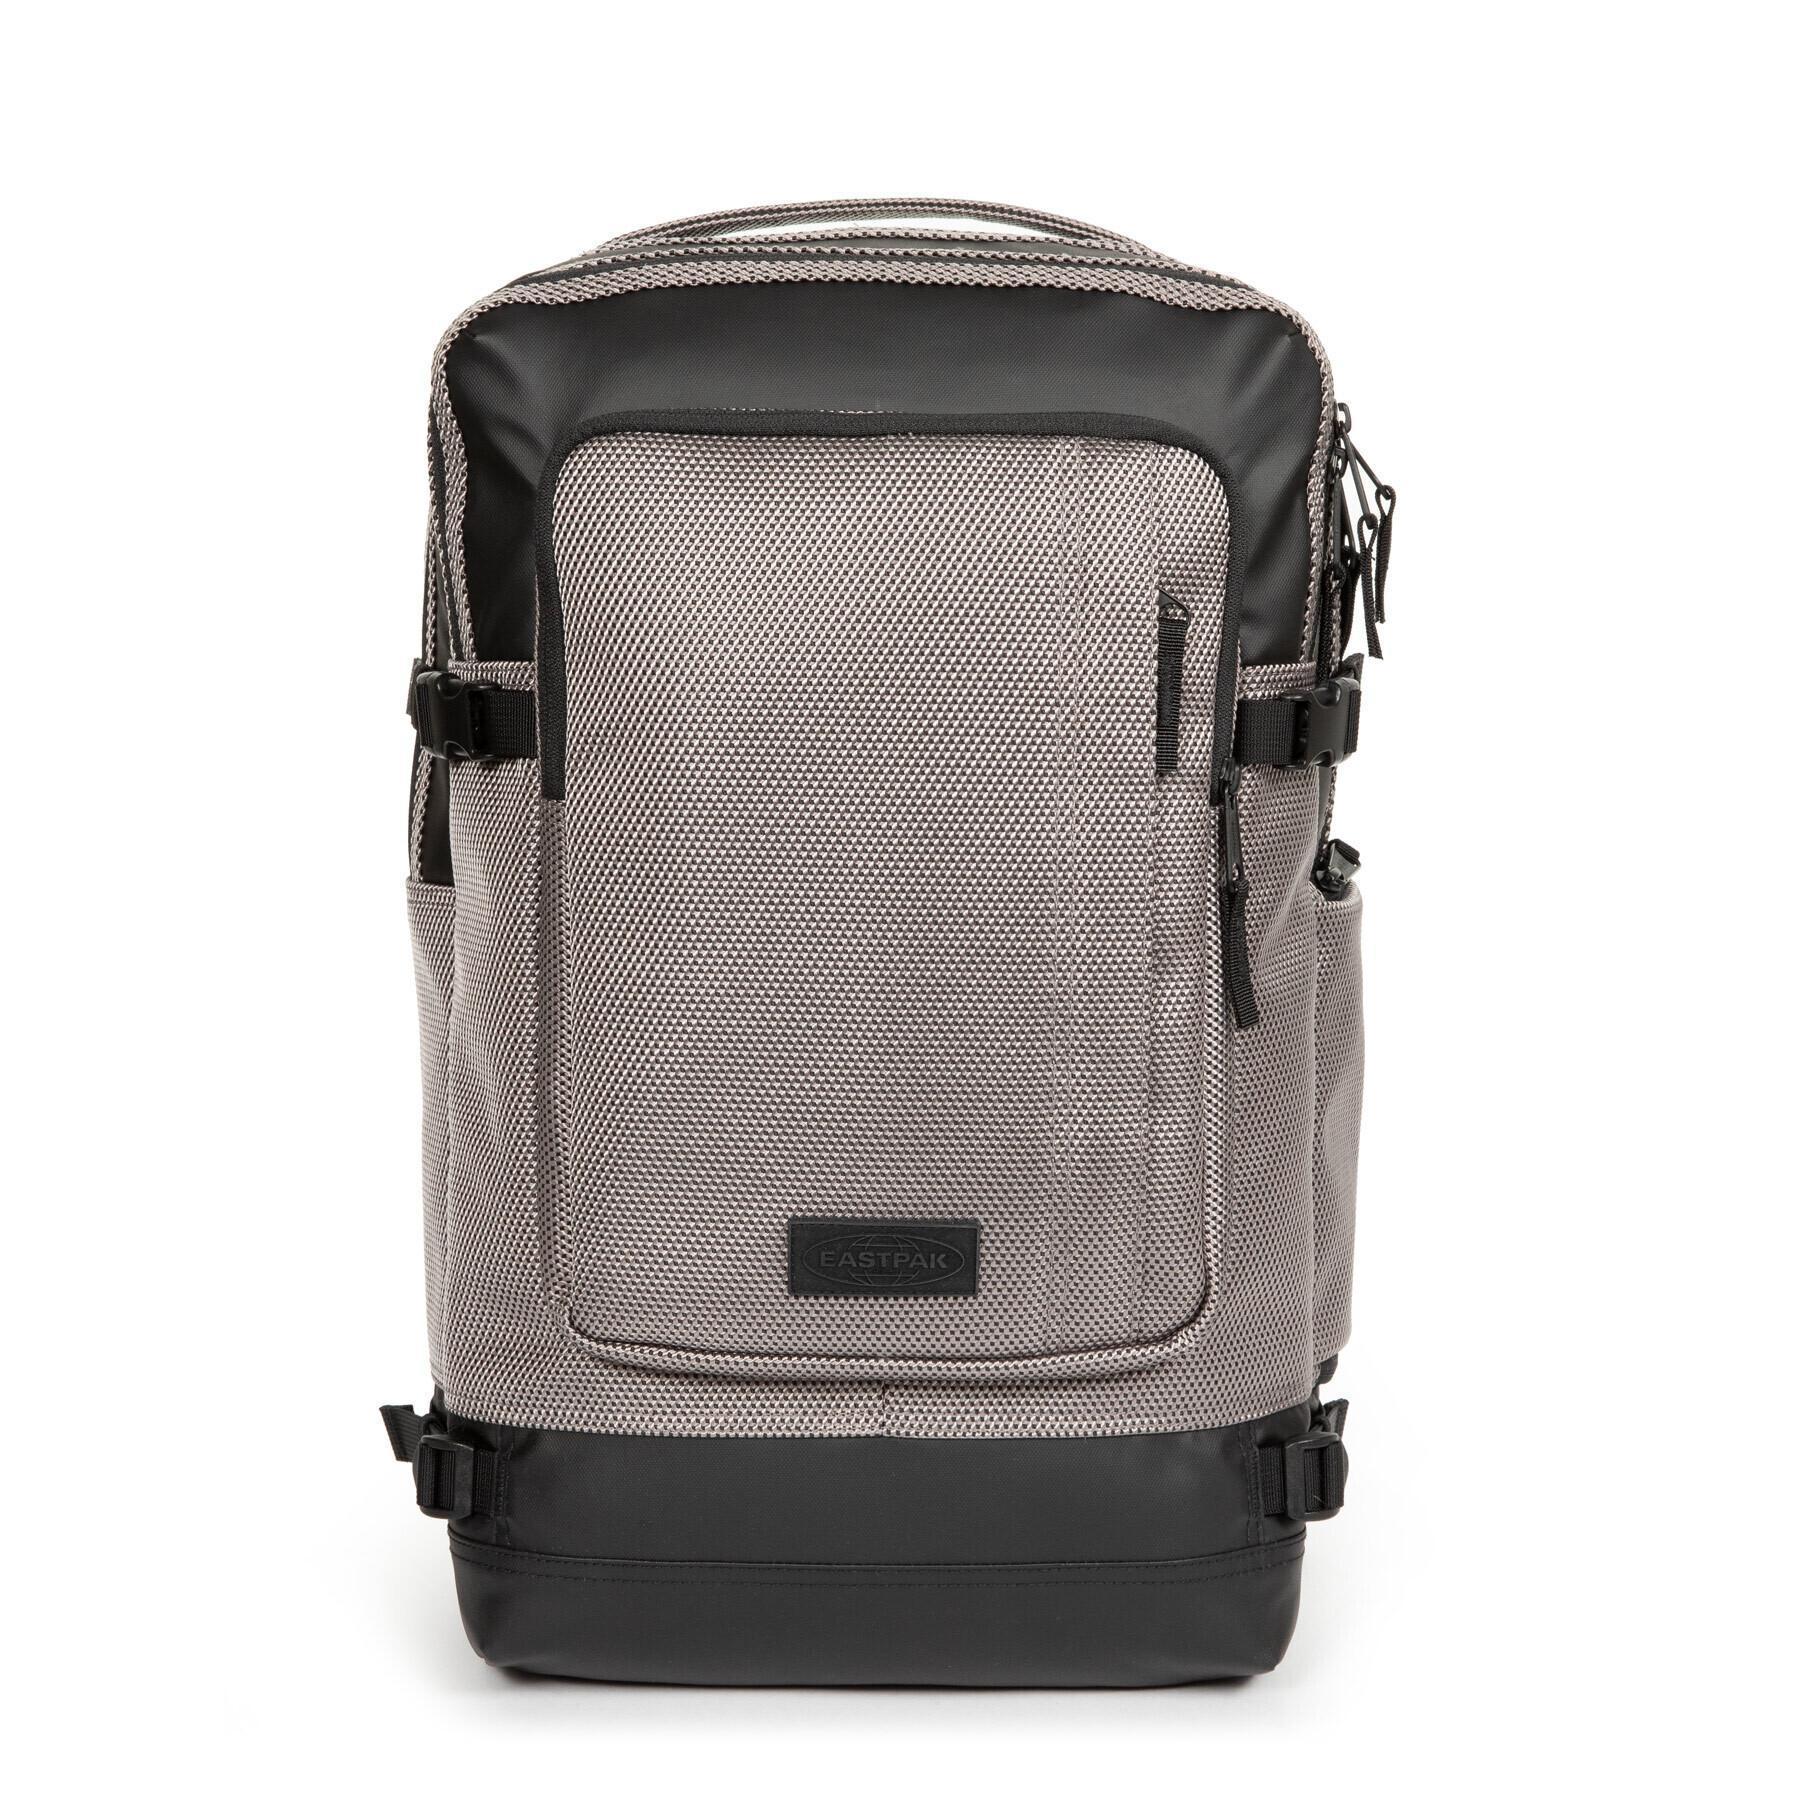 Grijp Toeval Tot stand brengen Backpack Eastpak Tecum L - Backpacks - Bags - Equipment